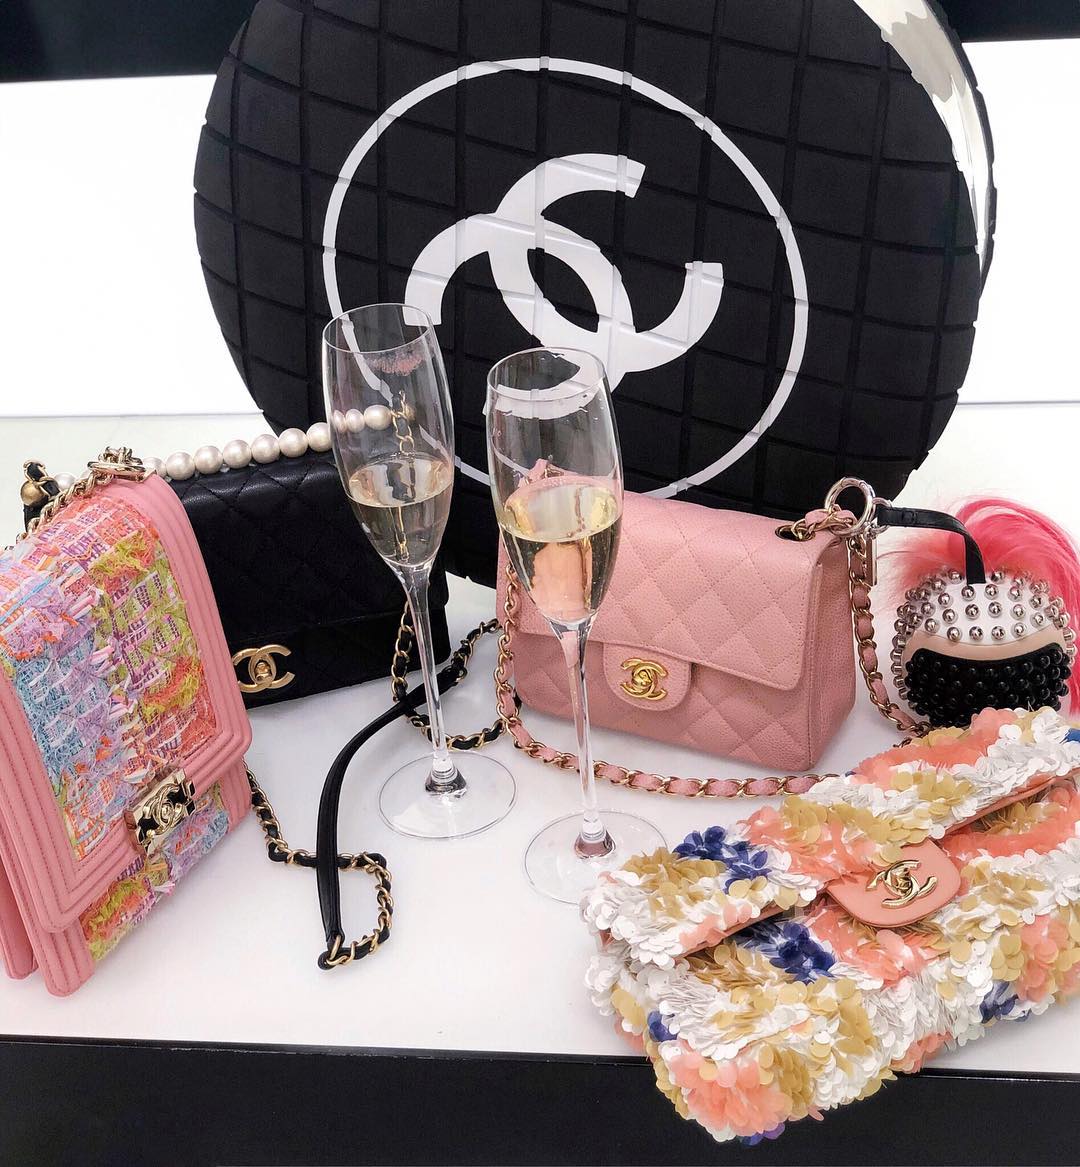 With Lagerfeld's Death, Interest in Chanel Skyrockets - PurseBop